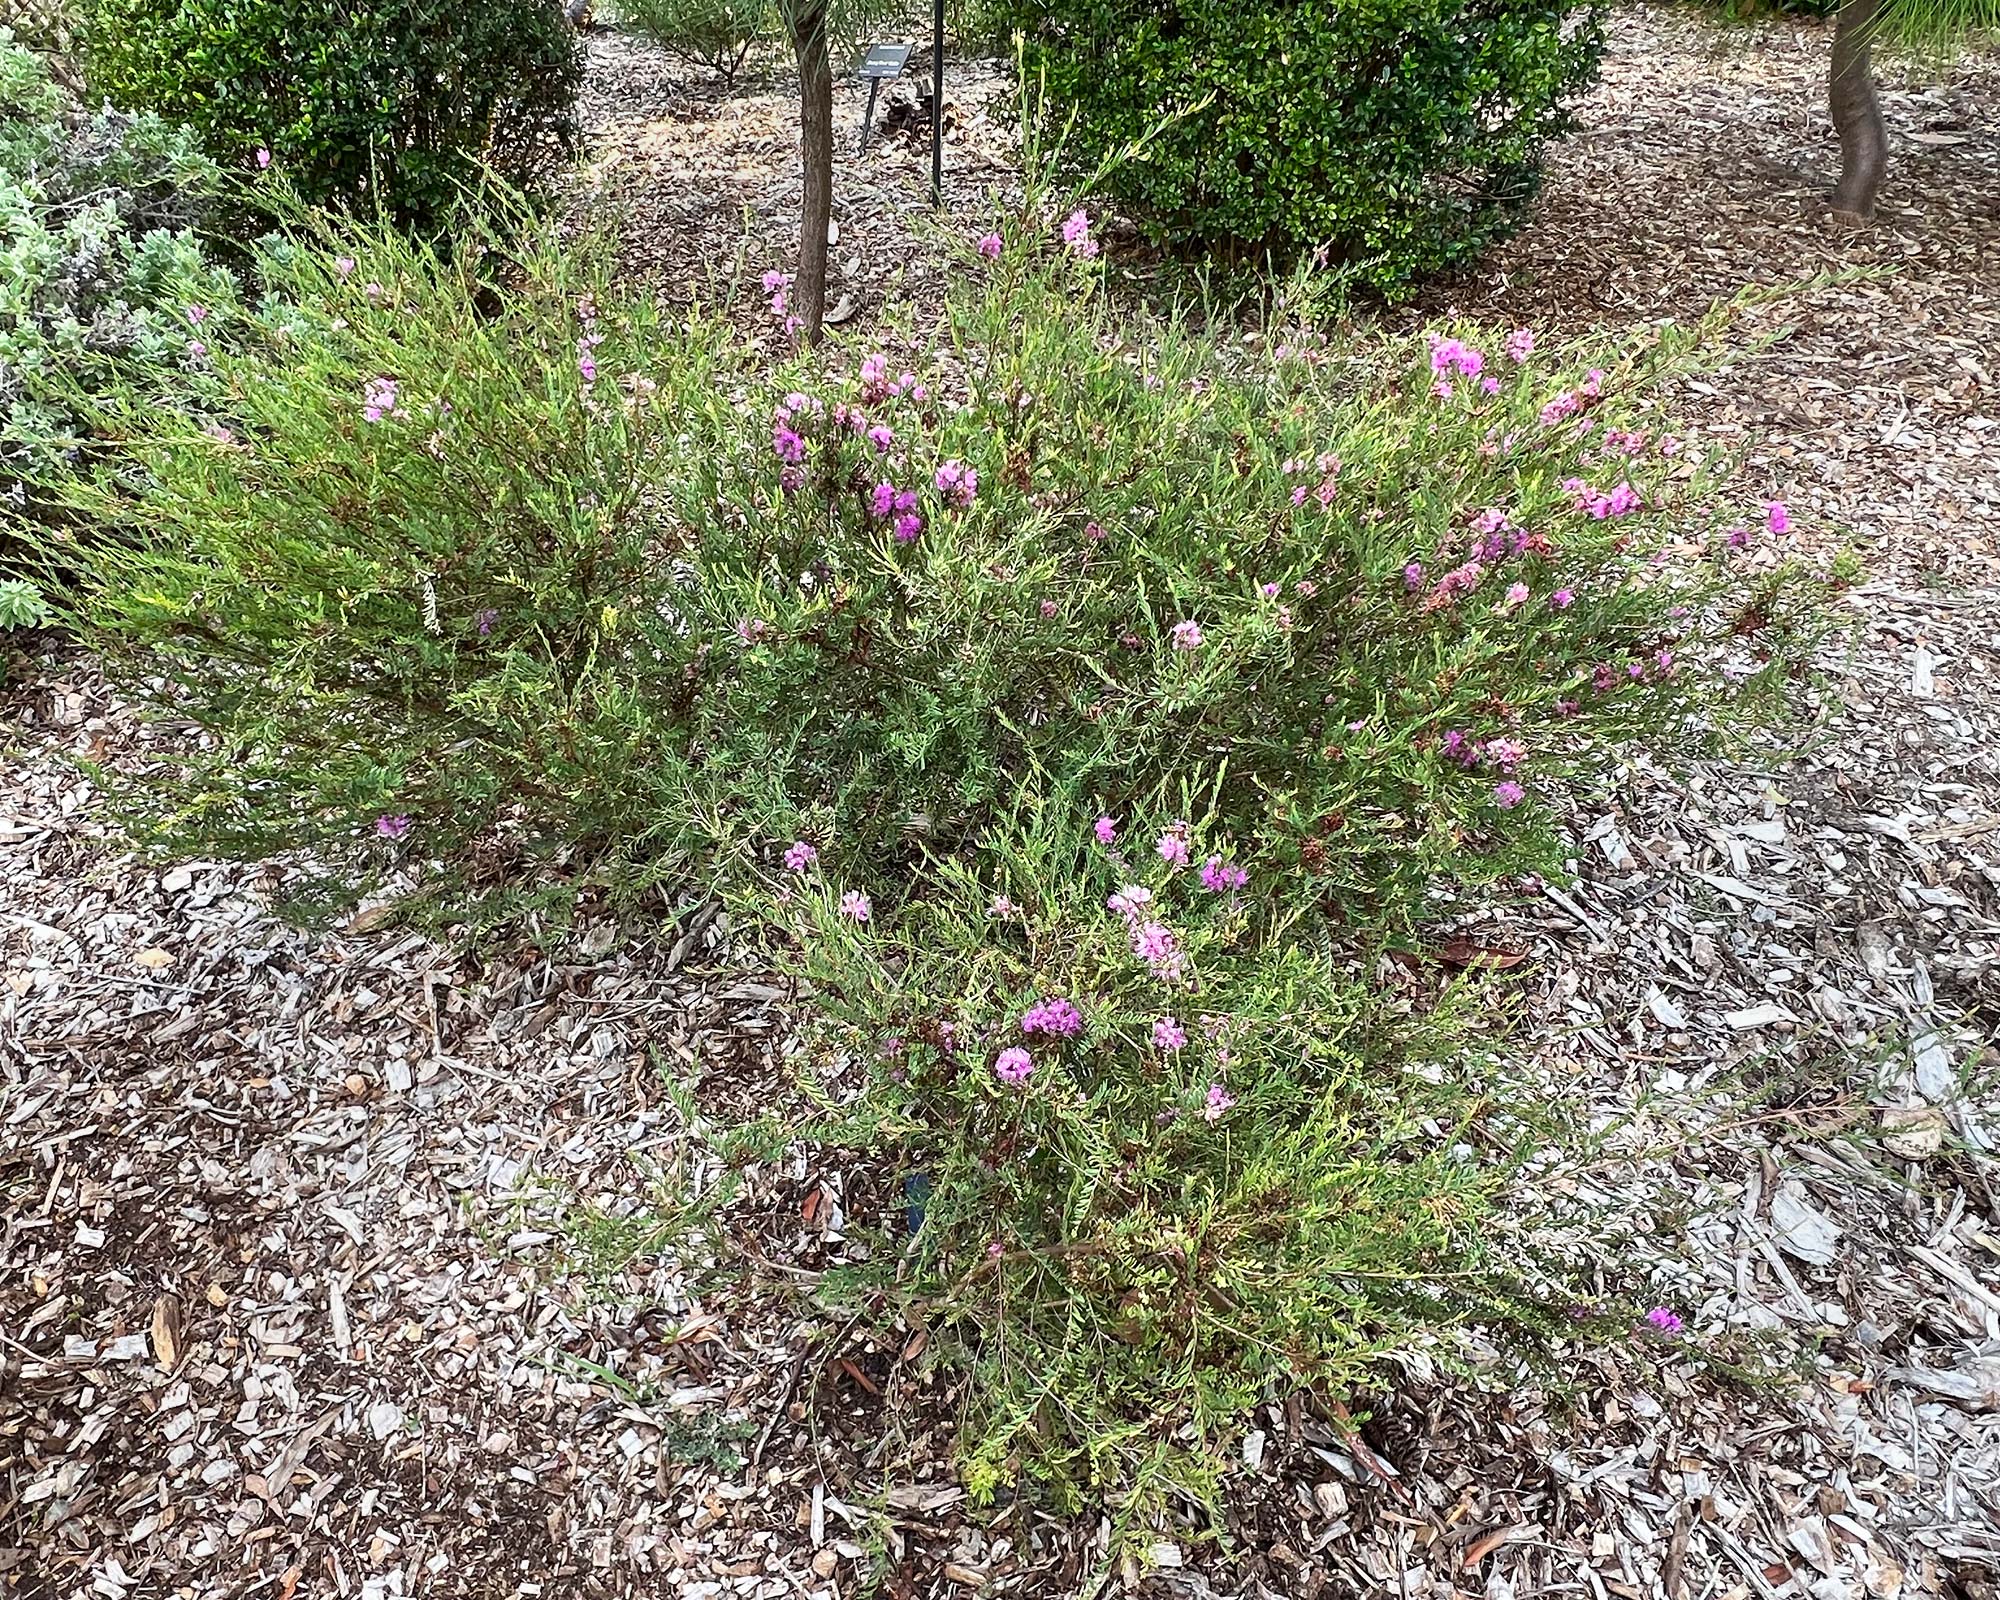 Melaleuca thymifolia - low spreading Australian native